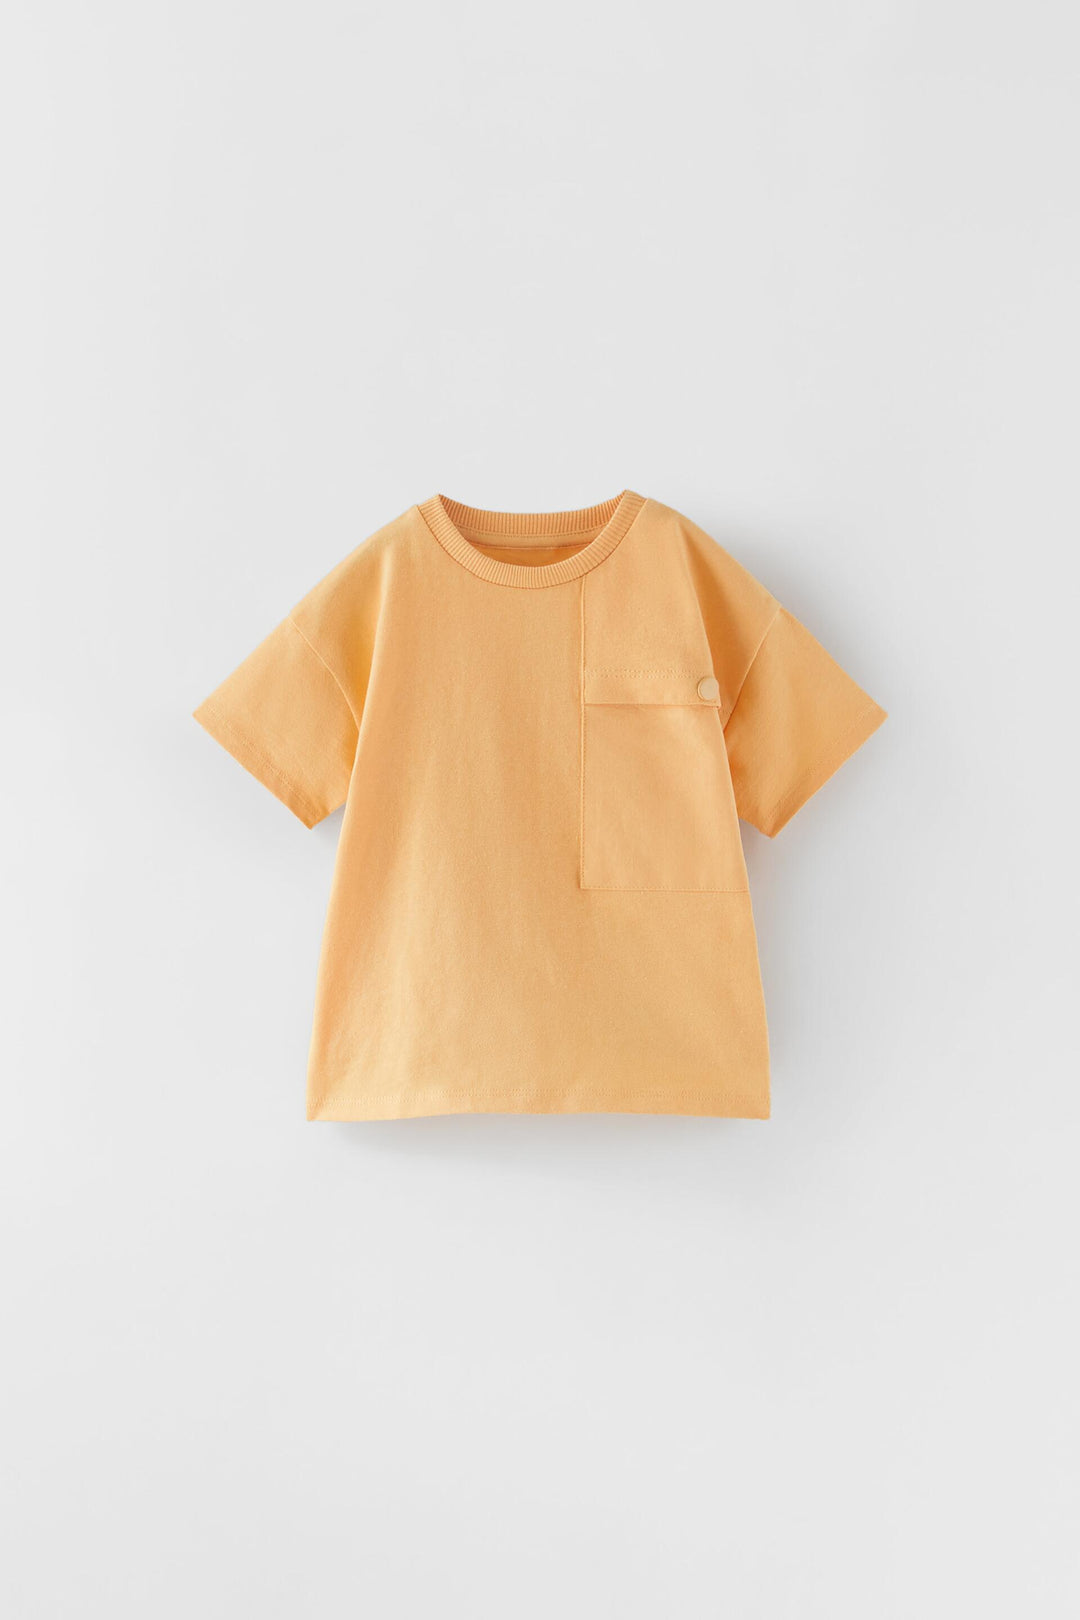 T-Shirt Bebe marque_Zara, genre_Garçon, Enfant Moudda Tunisie1